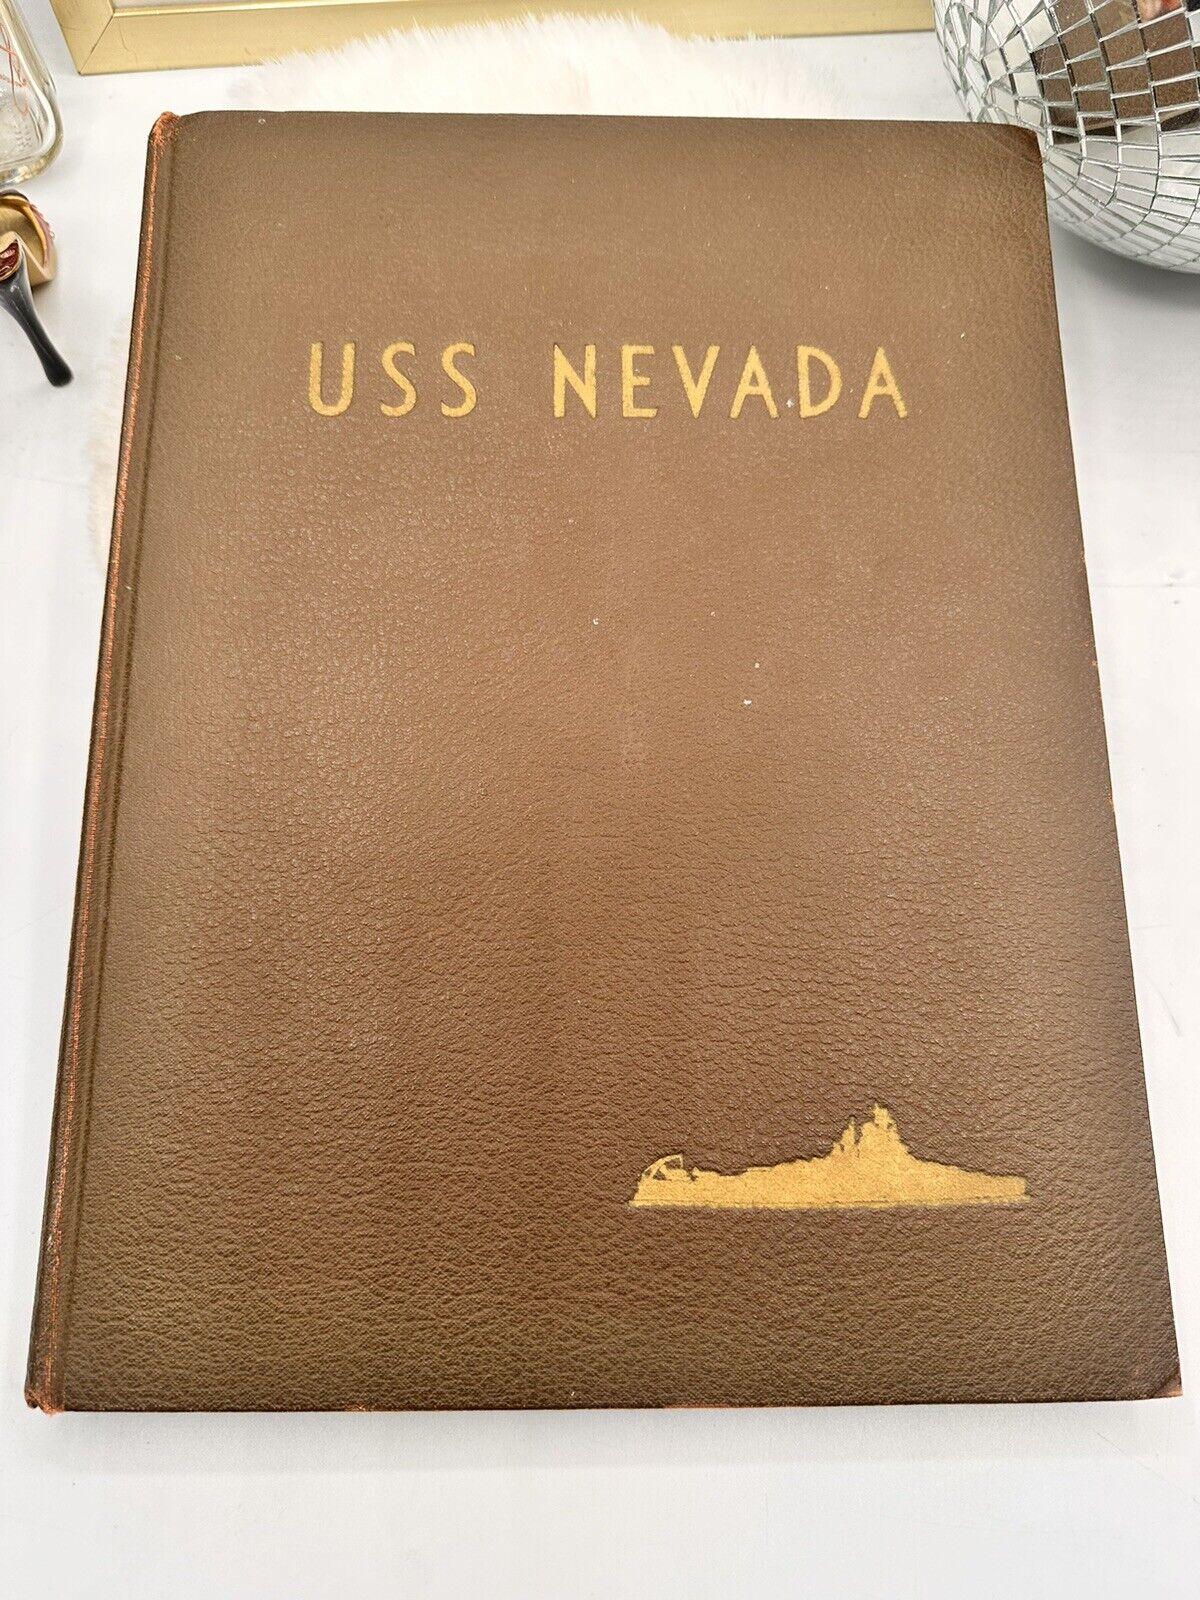 Extremely RARE and Hard to find USS Nevada Battleship World War 2 Cruisebook